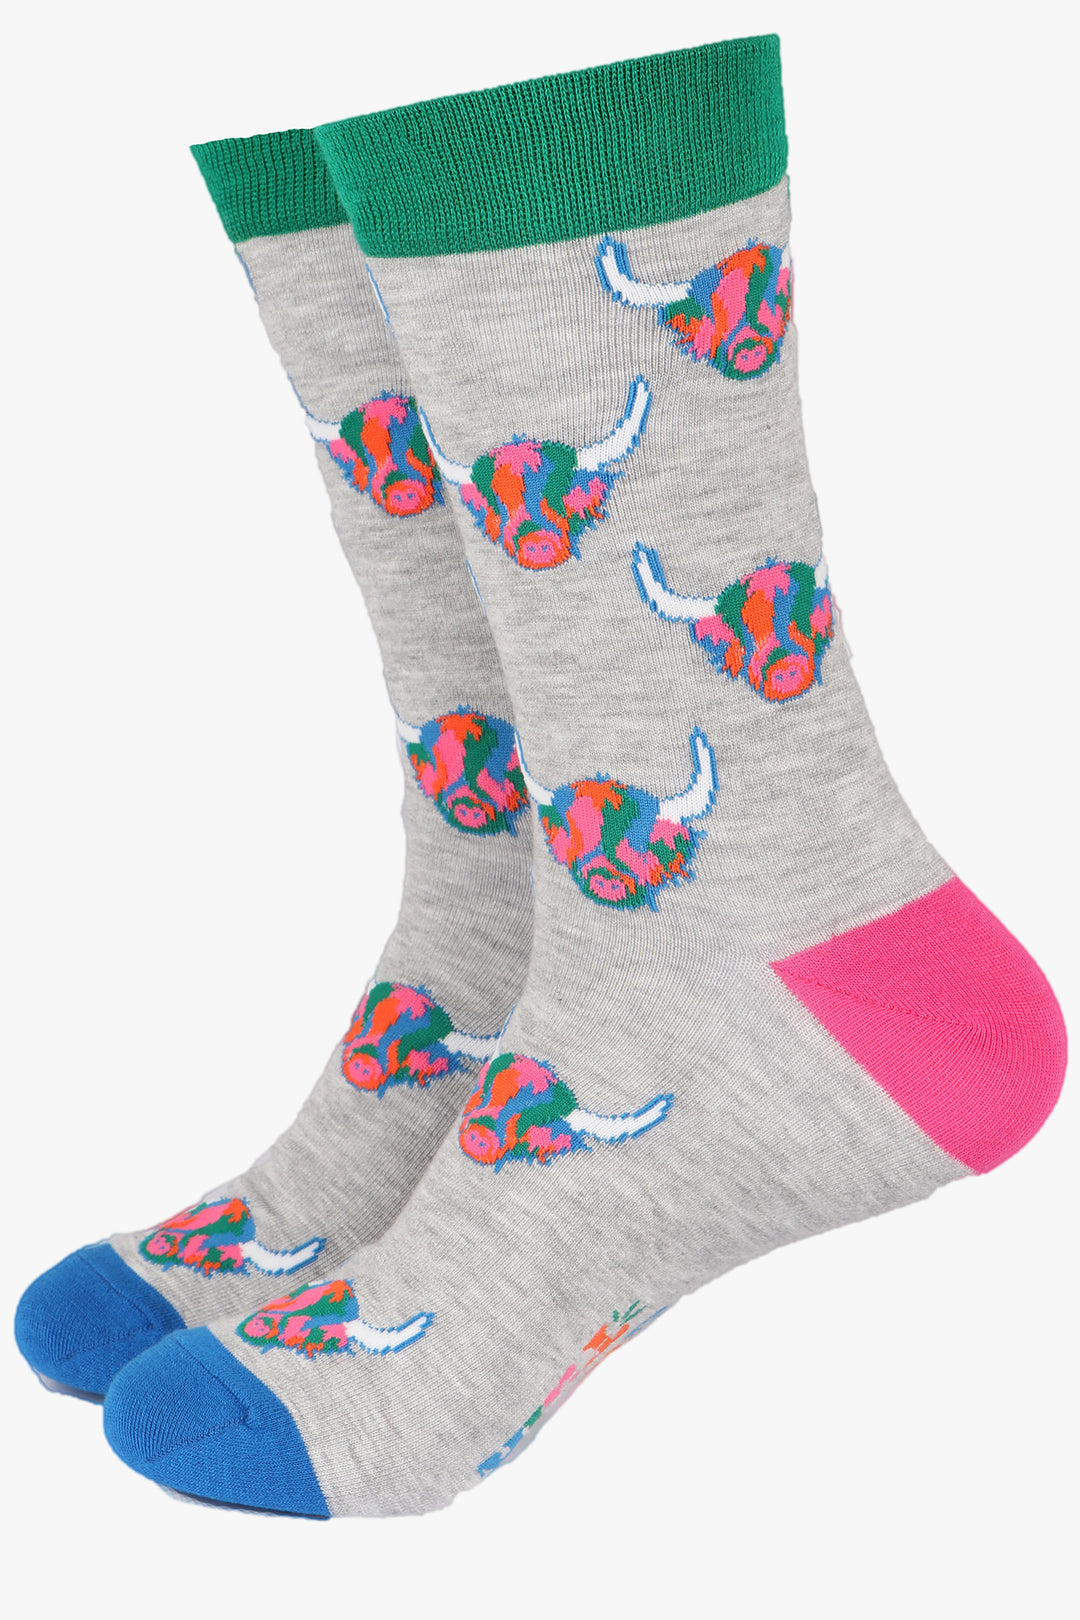 grey socks with a rainbow highland cow pattern